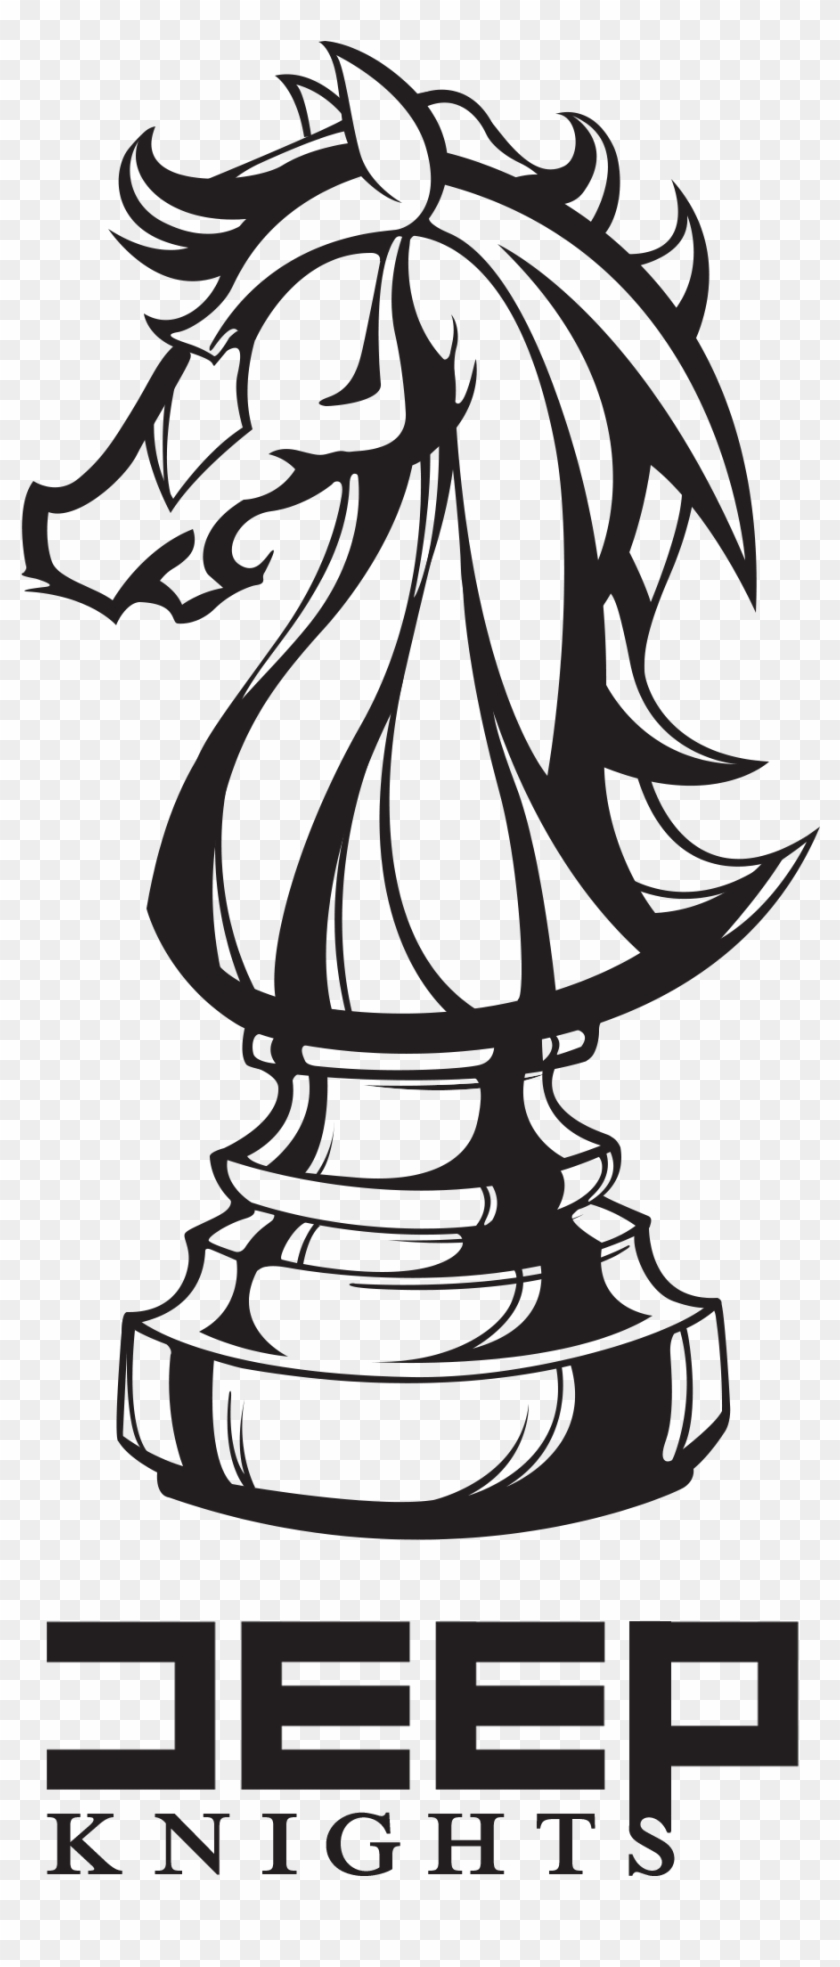 Deep Knight Logo Design - Knight Chess Piece Drawing Clipart